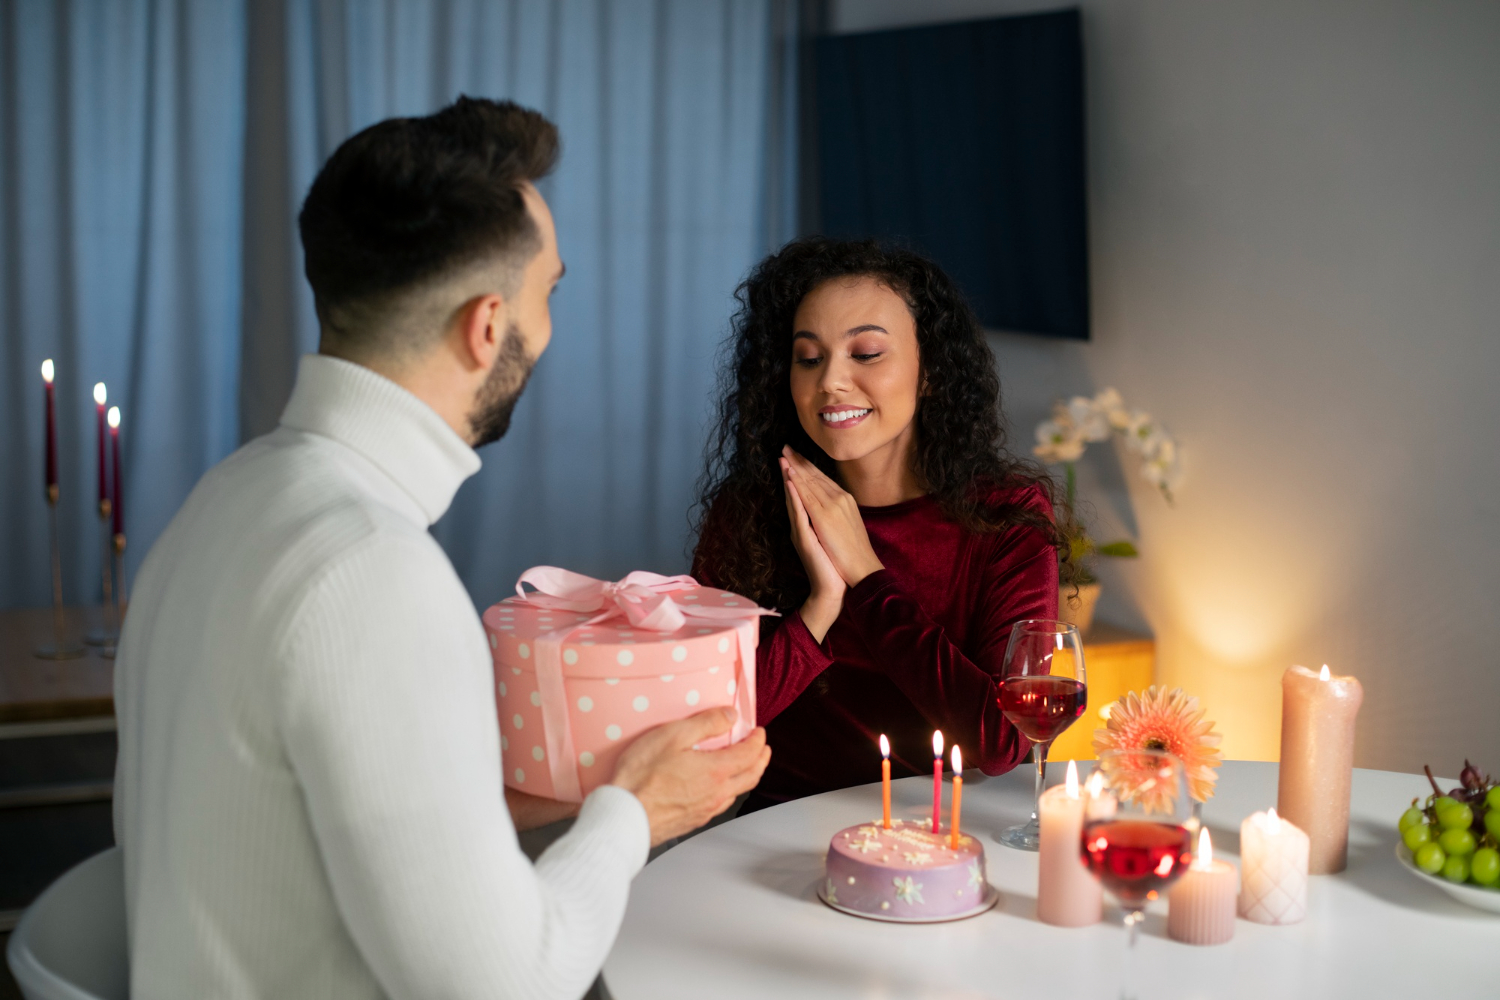 Ways to Make Someone's Birthday Special